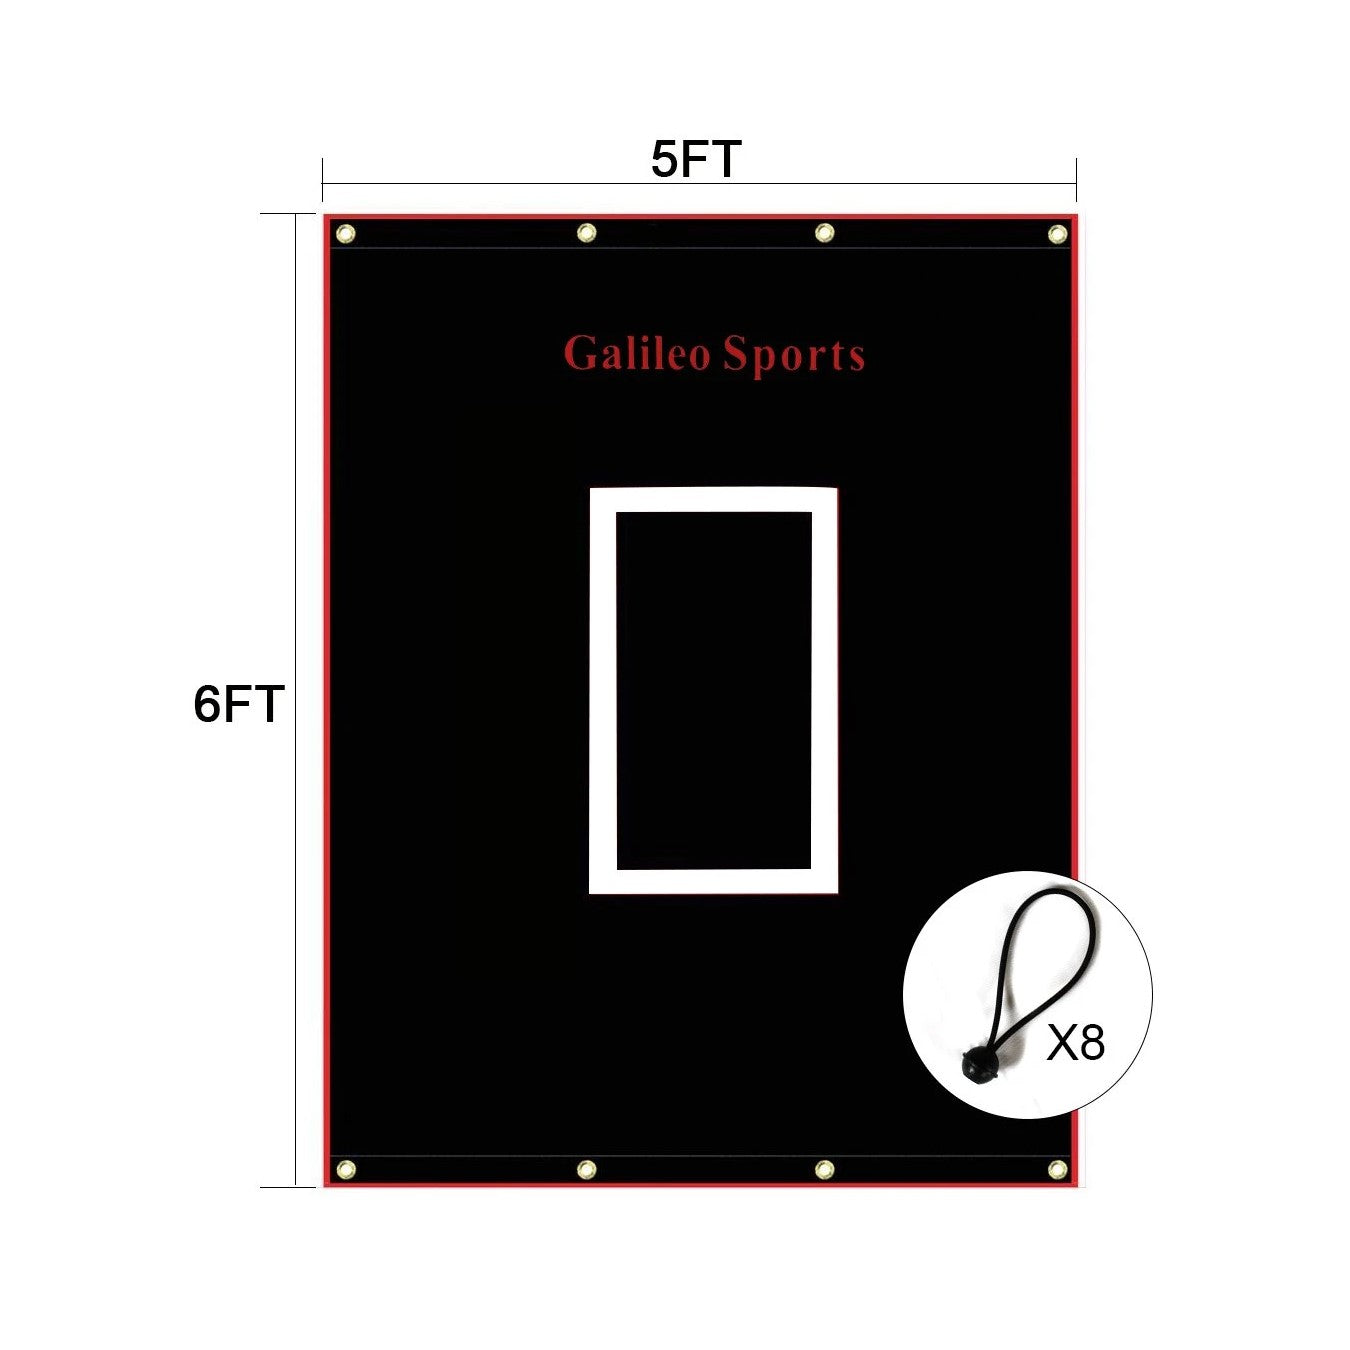 Galileo Softball Backstop Vinilo Heavy Duty Baseball Bating Cage Backstop Pitching Target Trainer Backstop Net Saver 